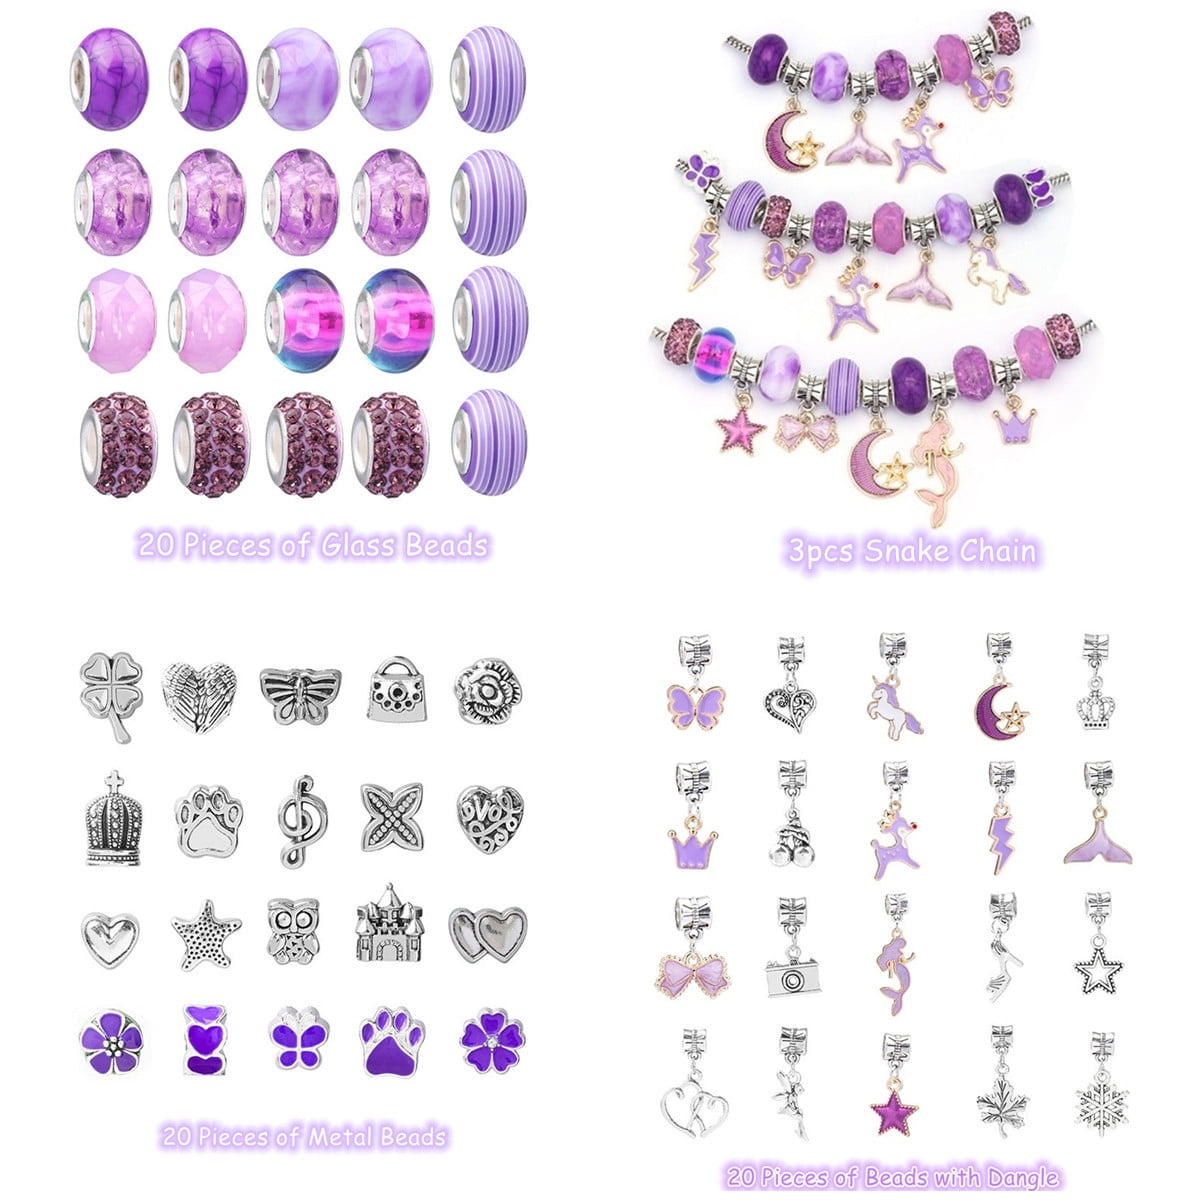 Athena's Elements Charm Bracelet Making Kit, DIY Jewelry Making Kit for Girls, 67 Pcs Bracelet Charms for Bracelet Making, Art and Crafts for Girls